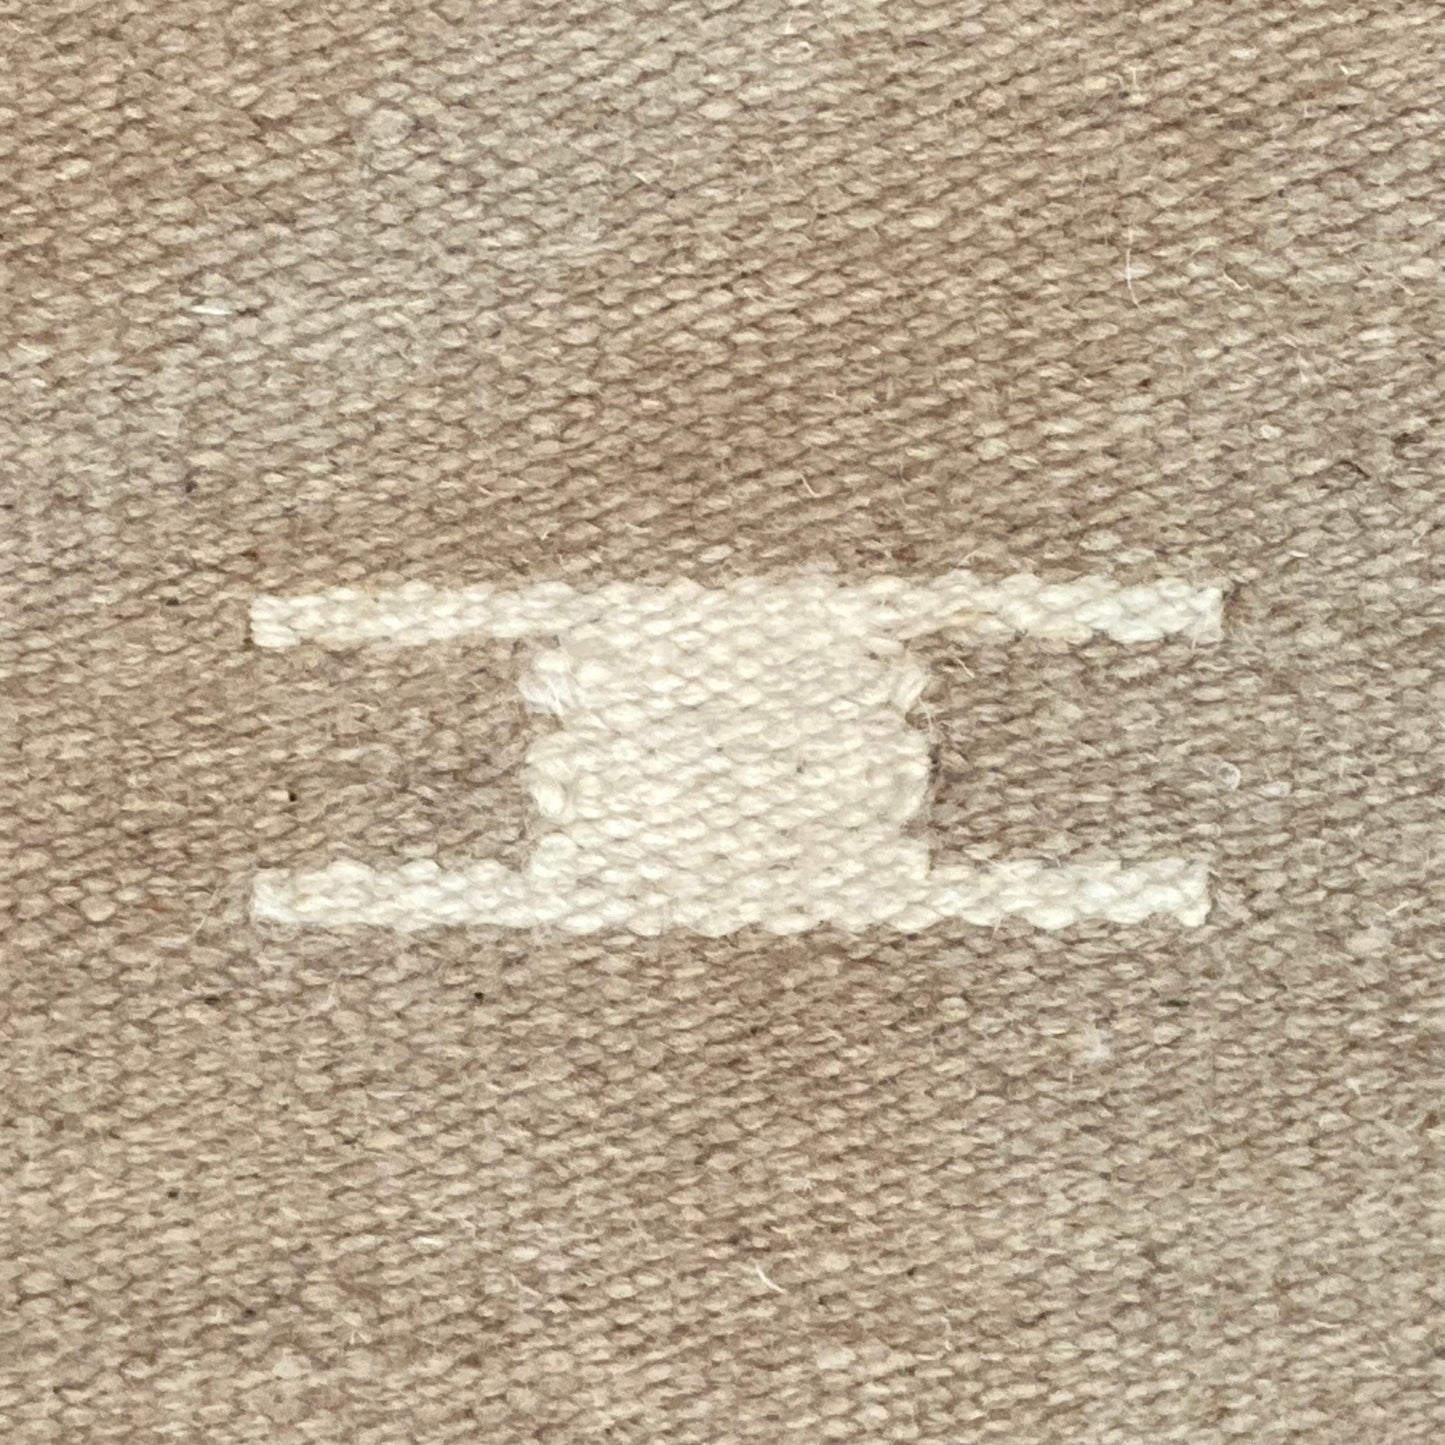 Handmade Kilim Wool Rug - Hs